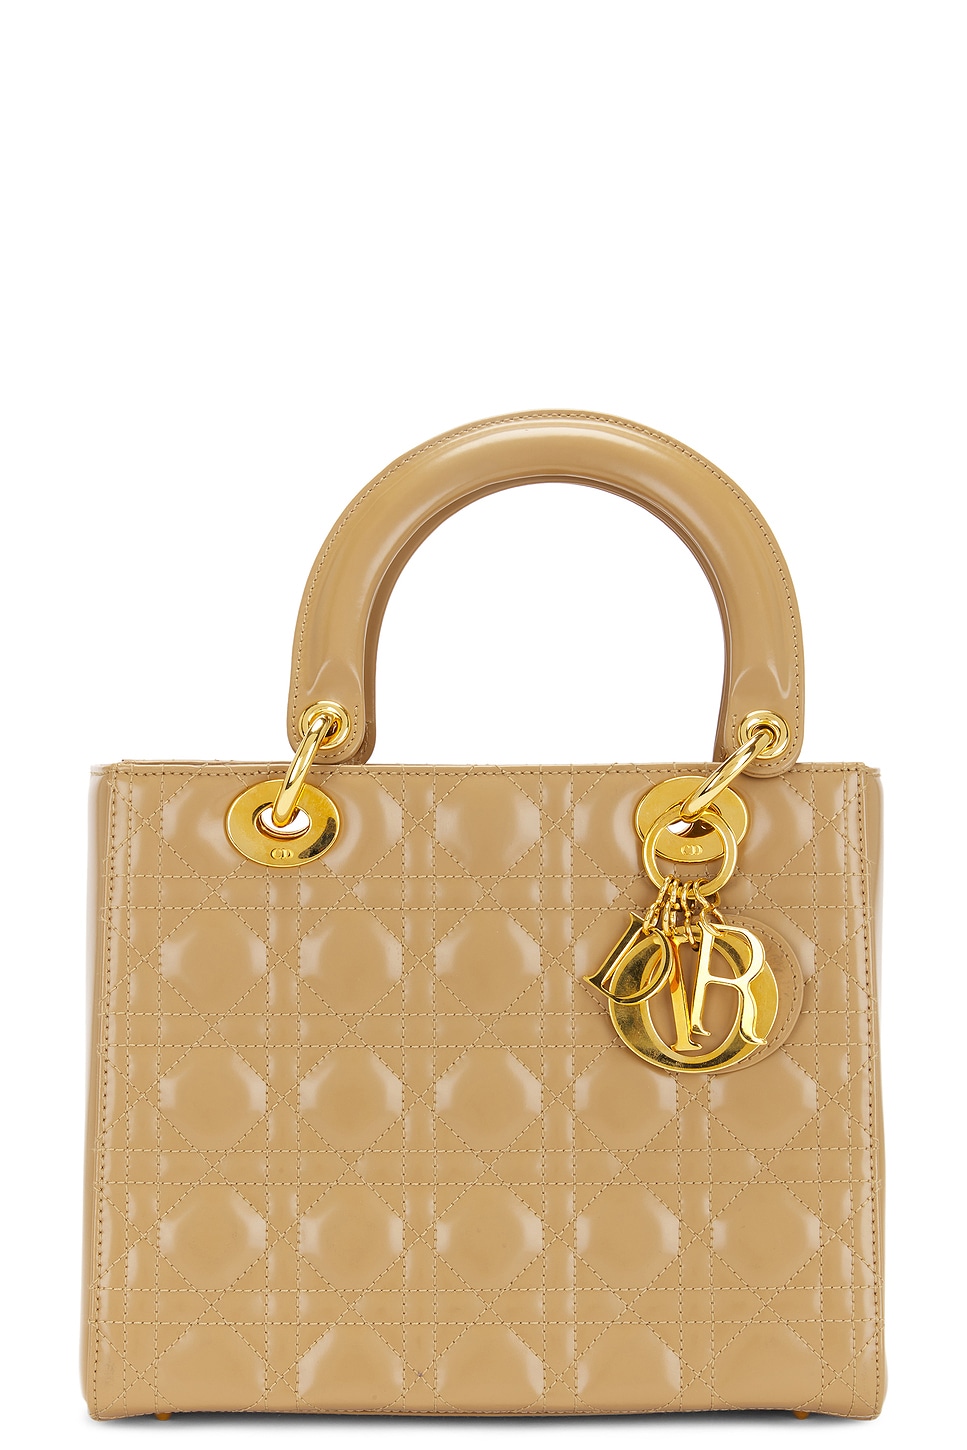 Dior Lady Cannage Handbag In Brown